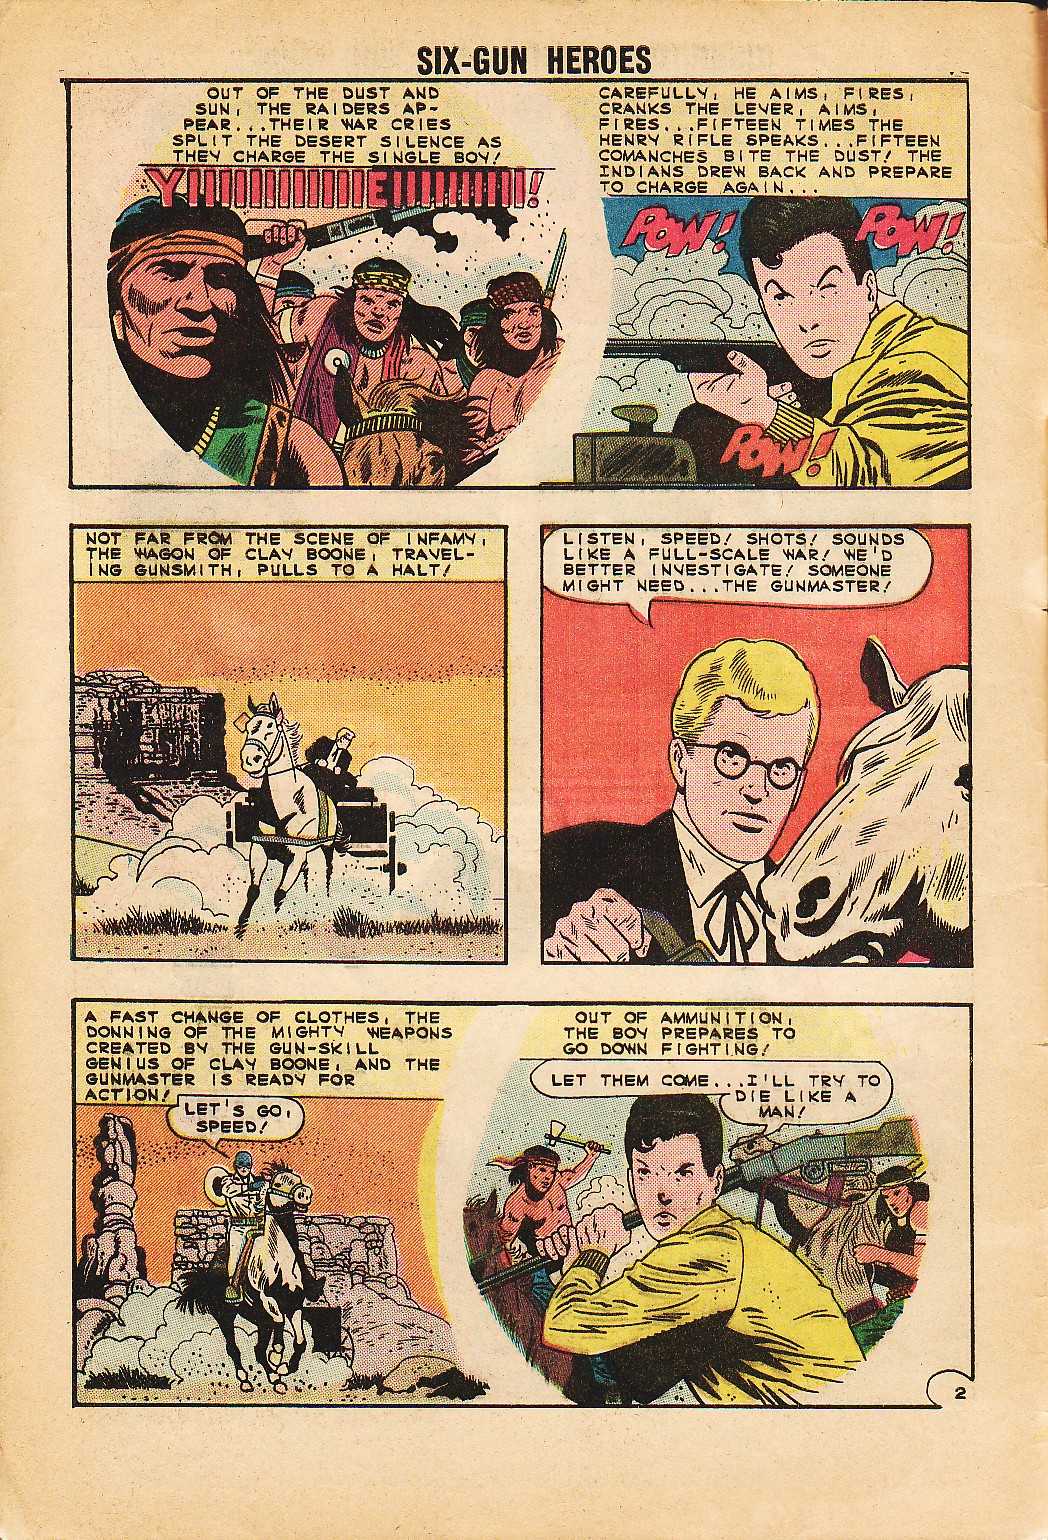 Read online Six-Gun Heroes comic -  Issue #79 - 4